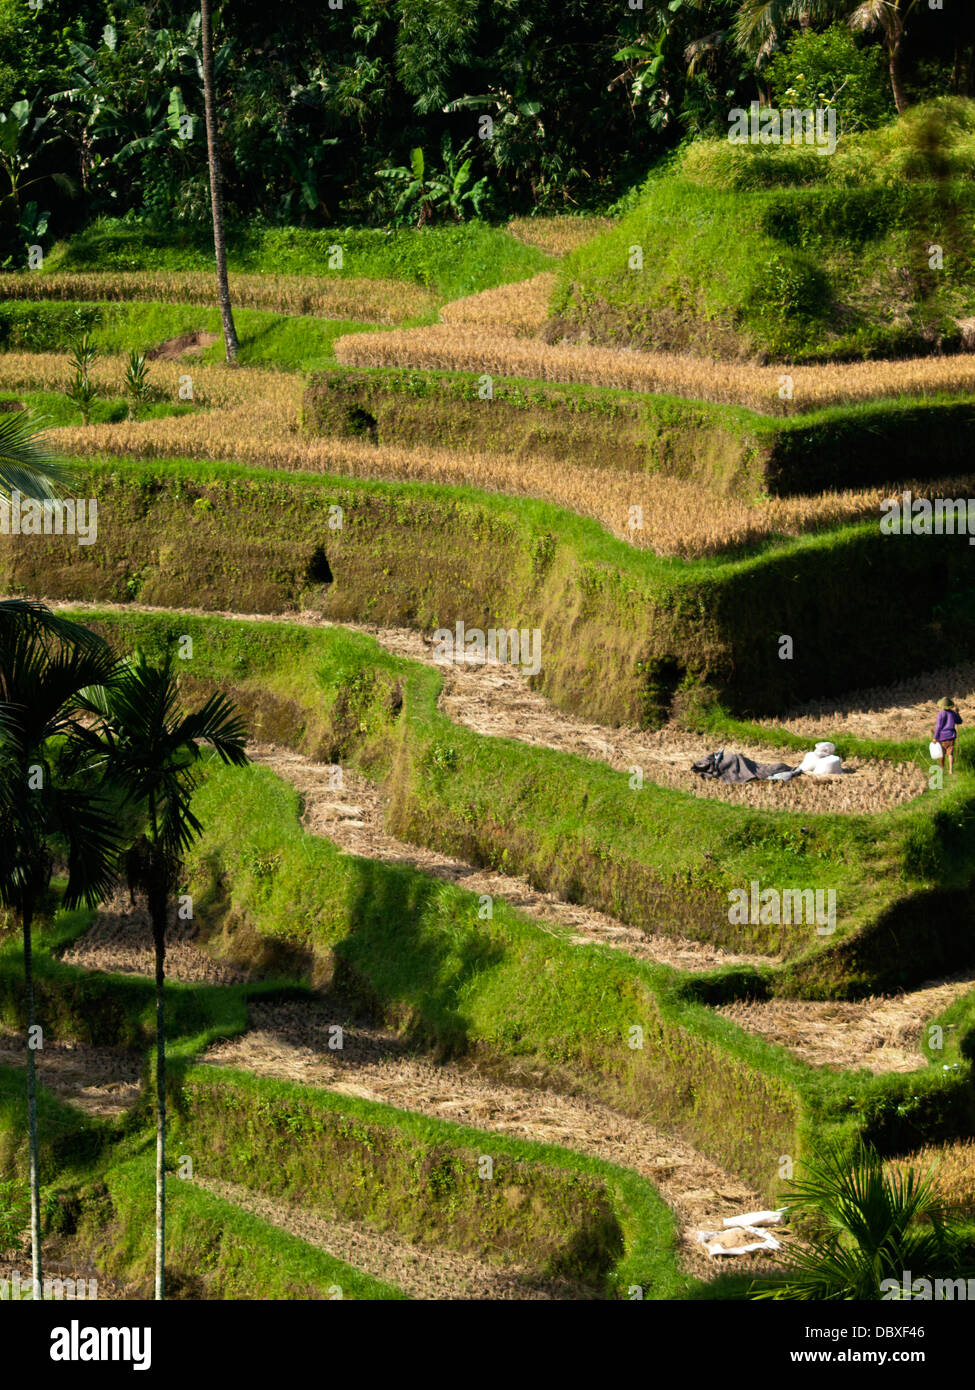 The wavy terrain at Jatiluwih rice terraces in Bali island, Indonesia Stock  Photo - Alamy